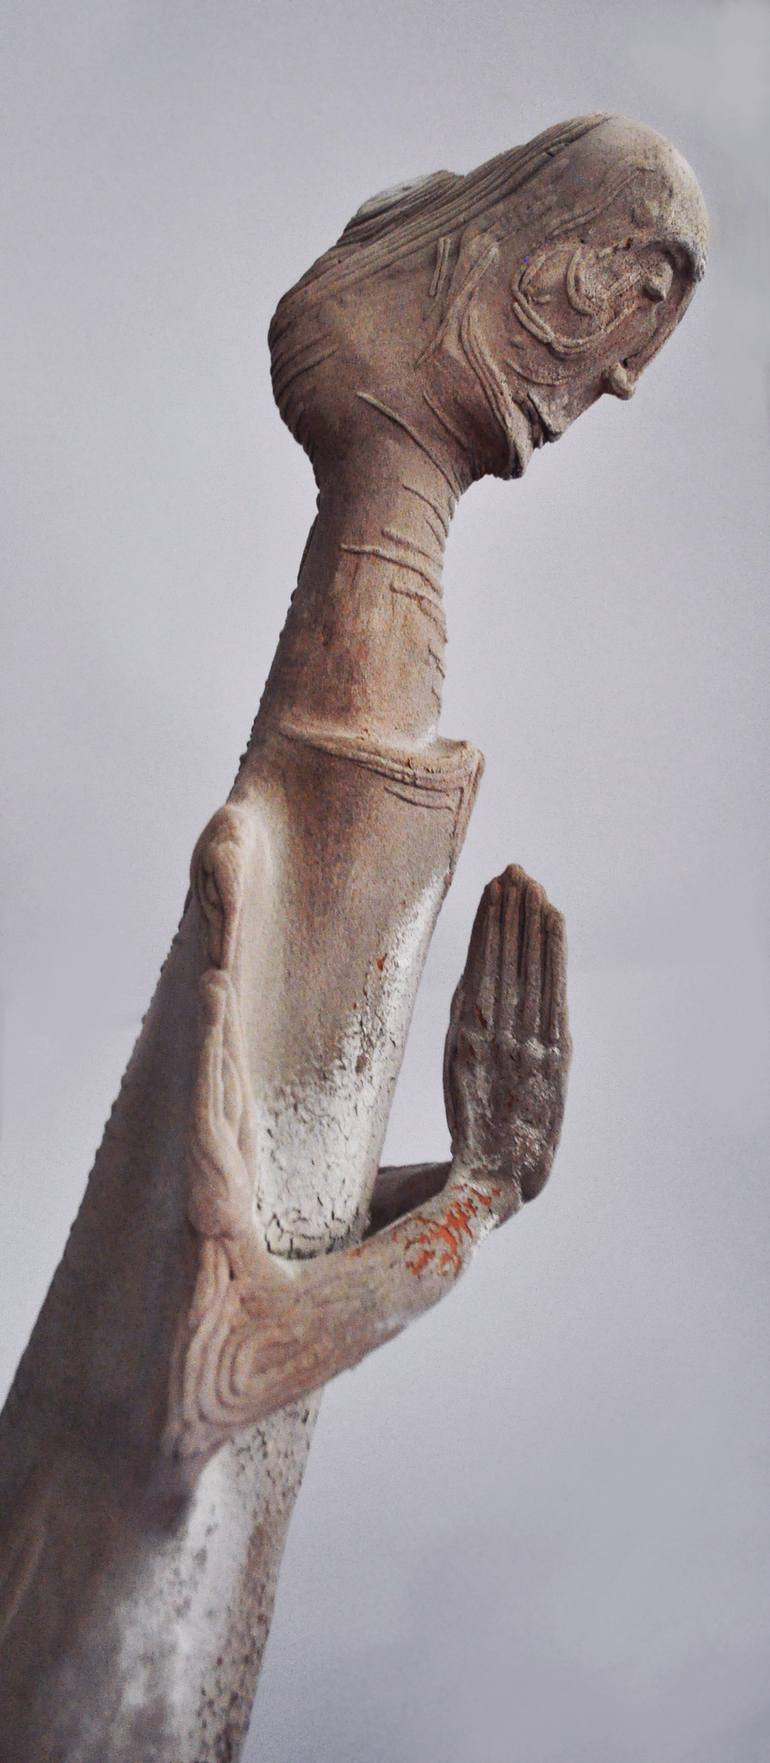 Original Conceptual Religious Sculpture by Andrei Alupoaie